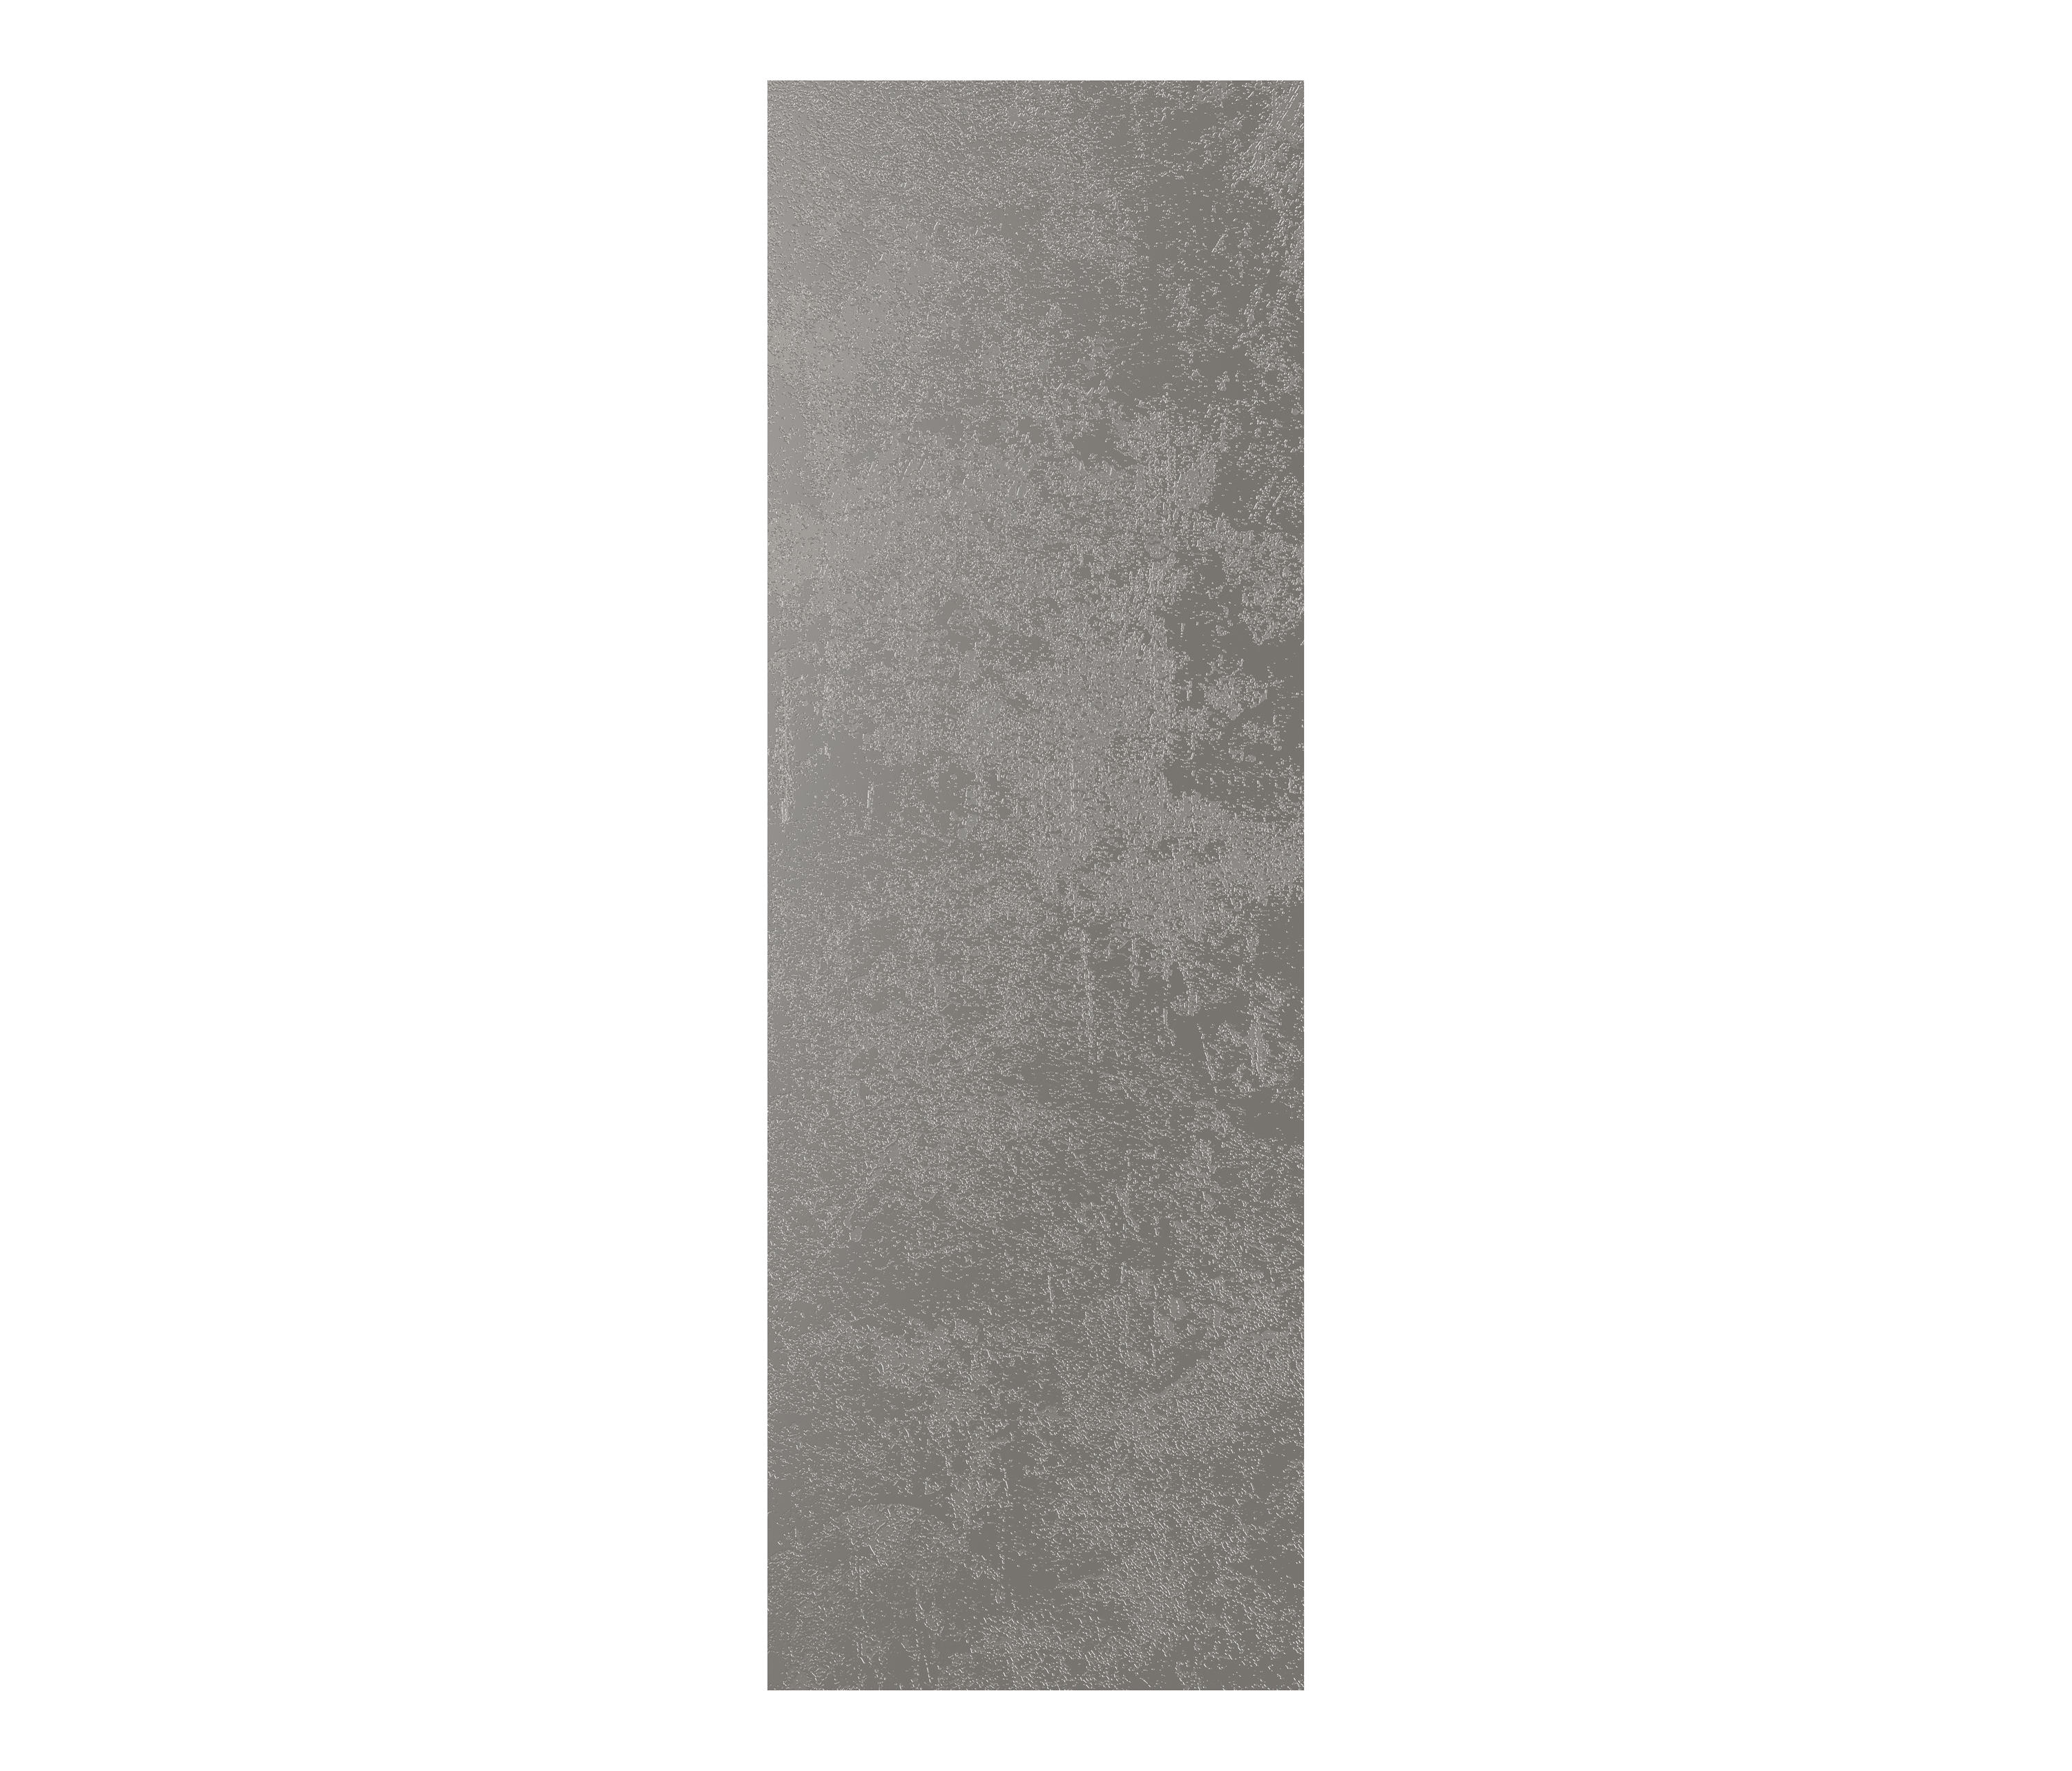 SOIRéE RF 01 - Ceramic tiles from Mirage | Architonic